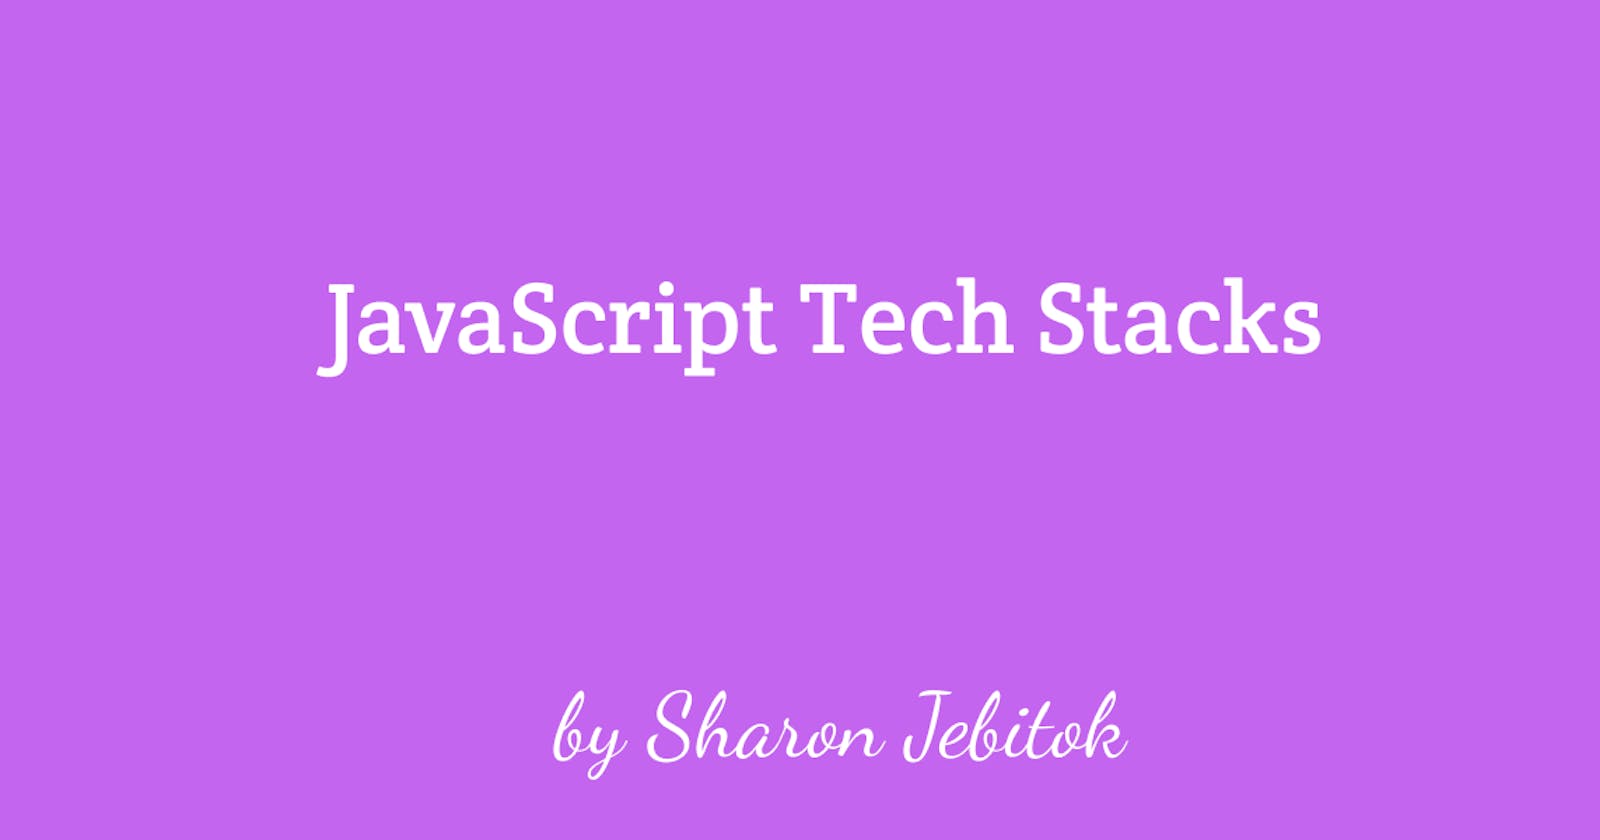 Mern Stack among other JavaScript Tech Stacks